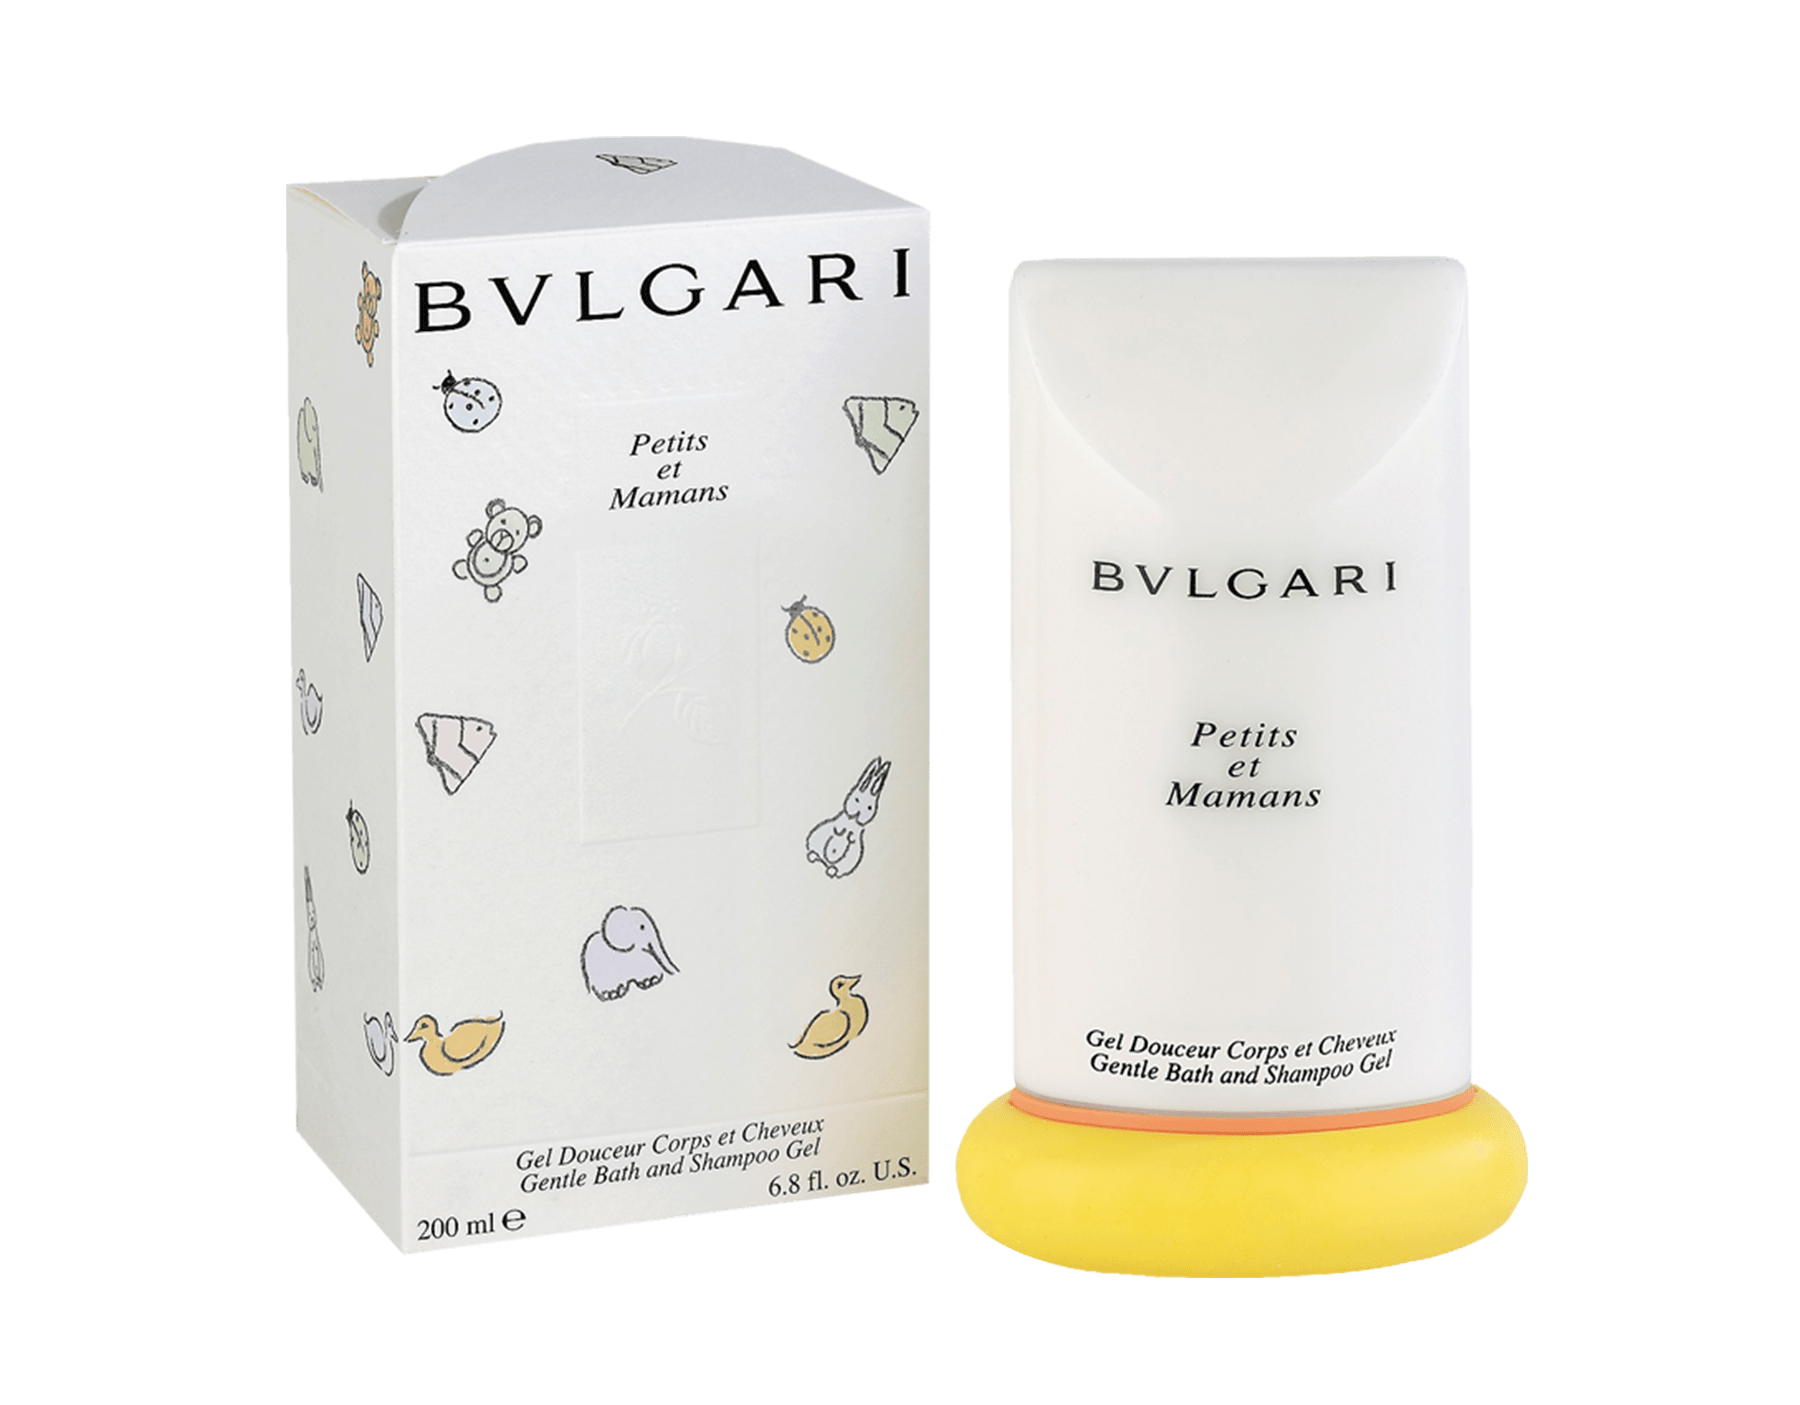 bulgari bath products